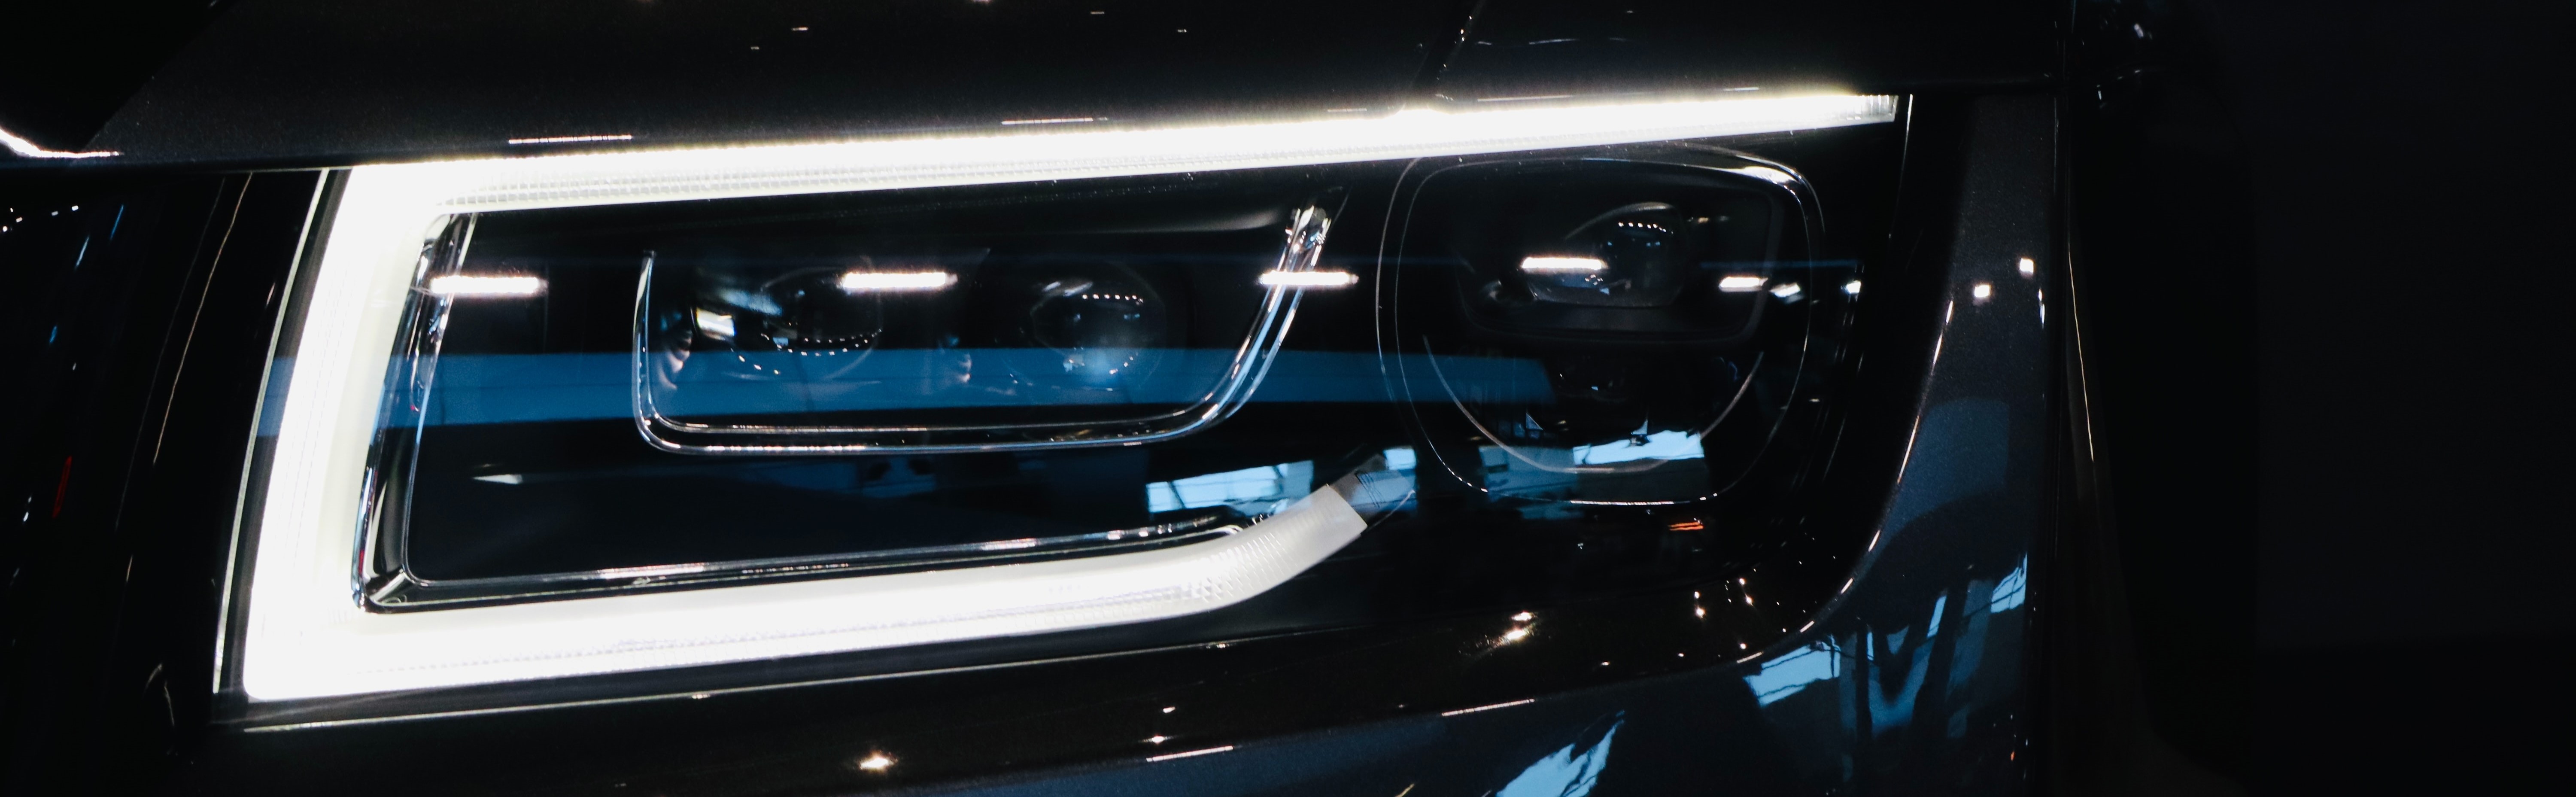 Afbeelding xenonverlichting auto